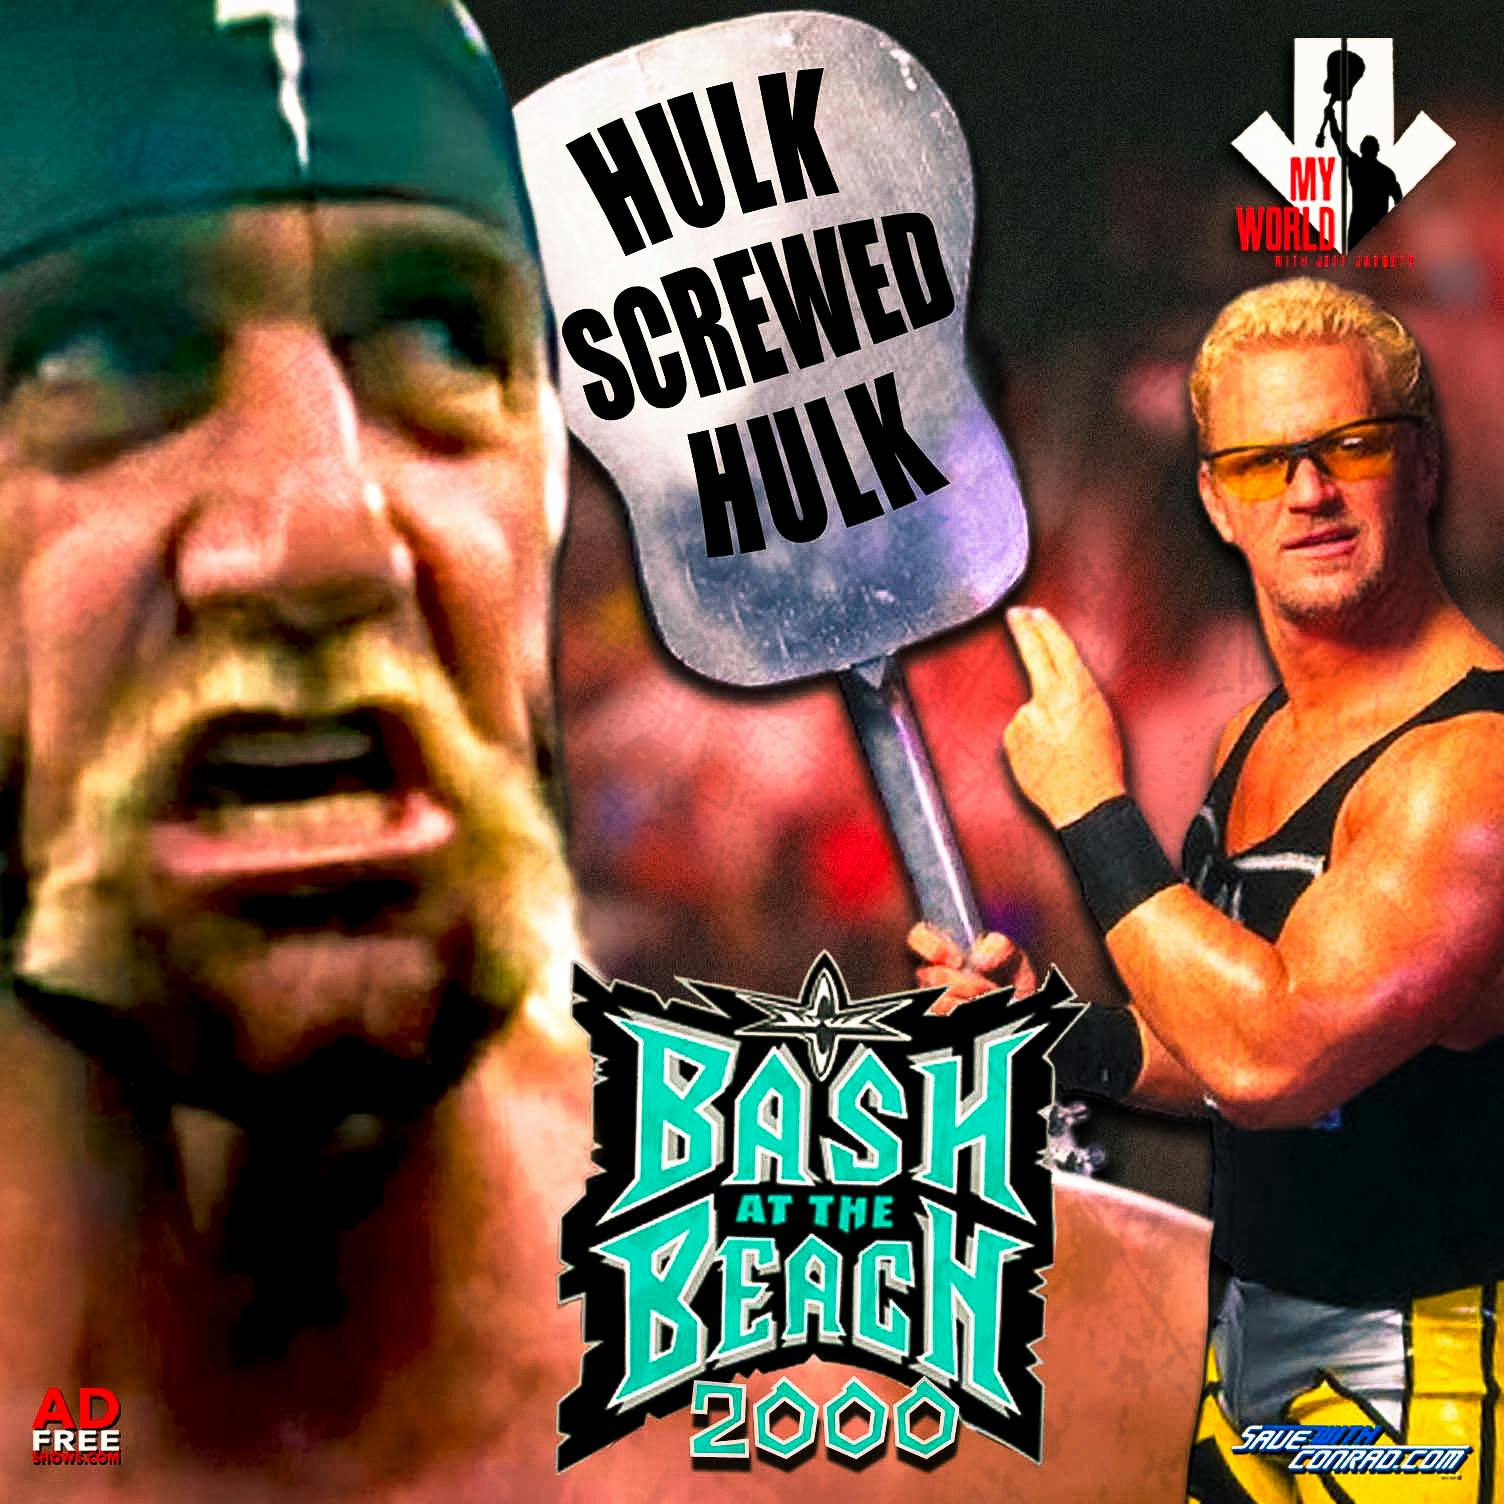 Episode 10: Hulk Screwed Hulk/Bash At The Beach 2000